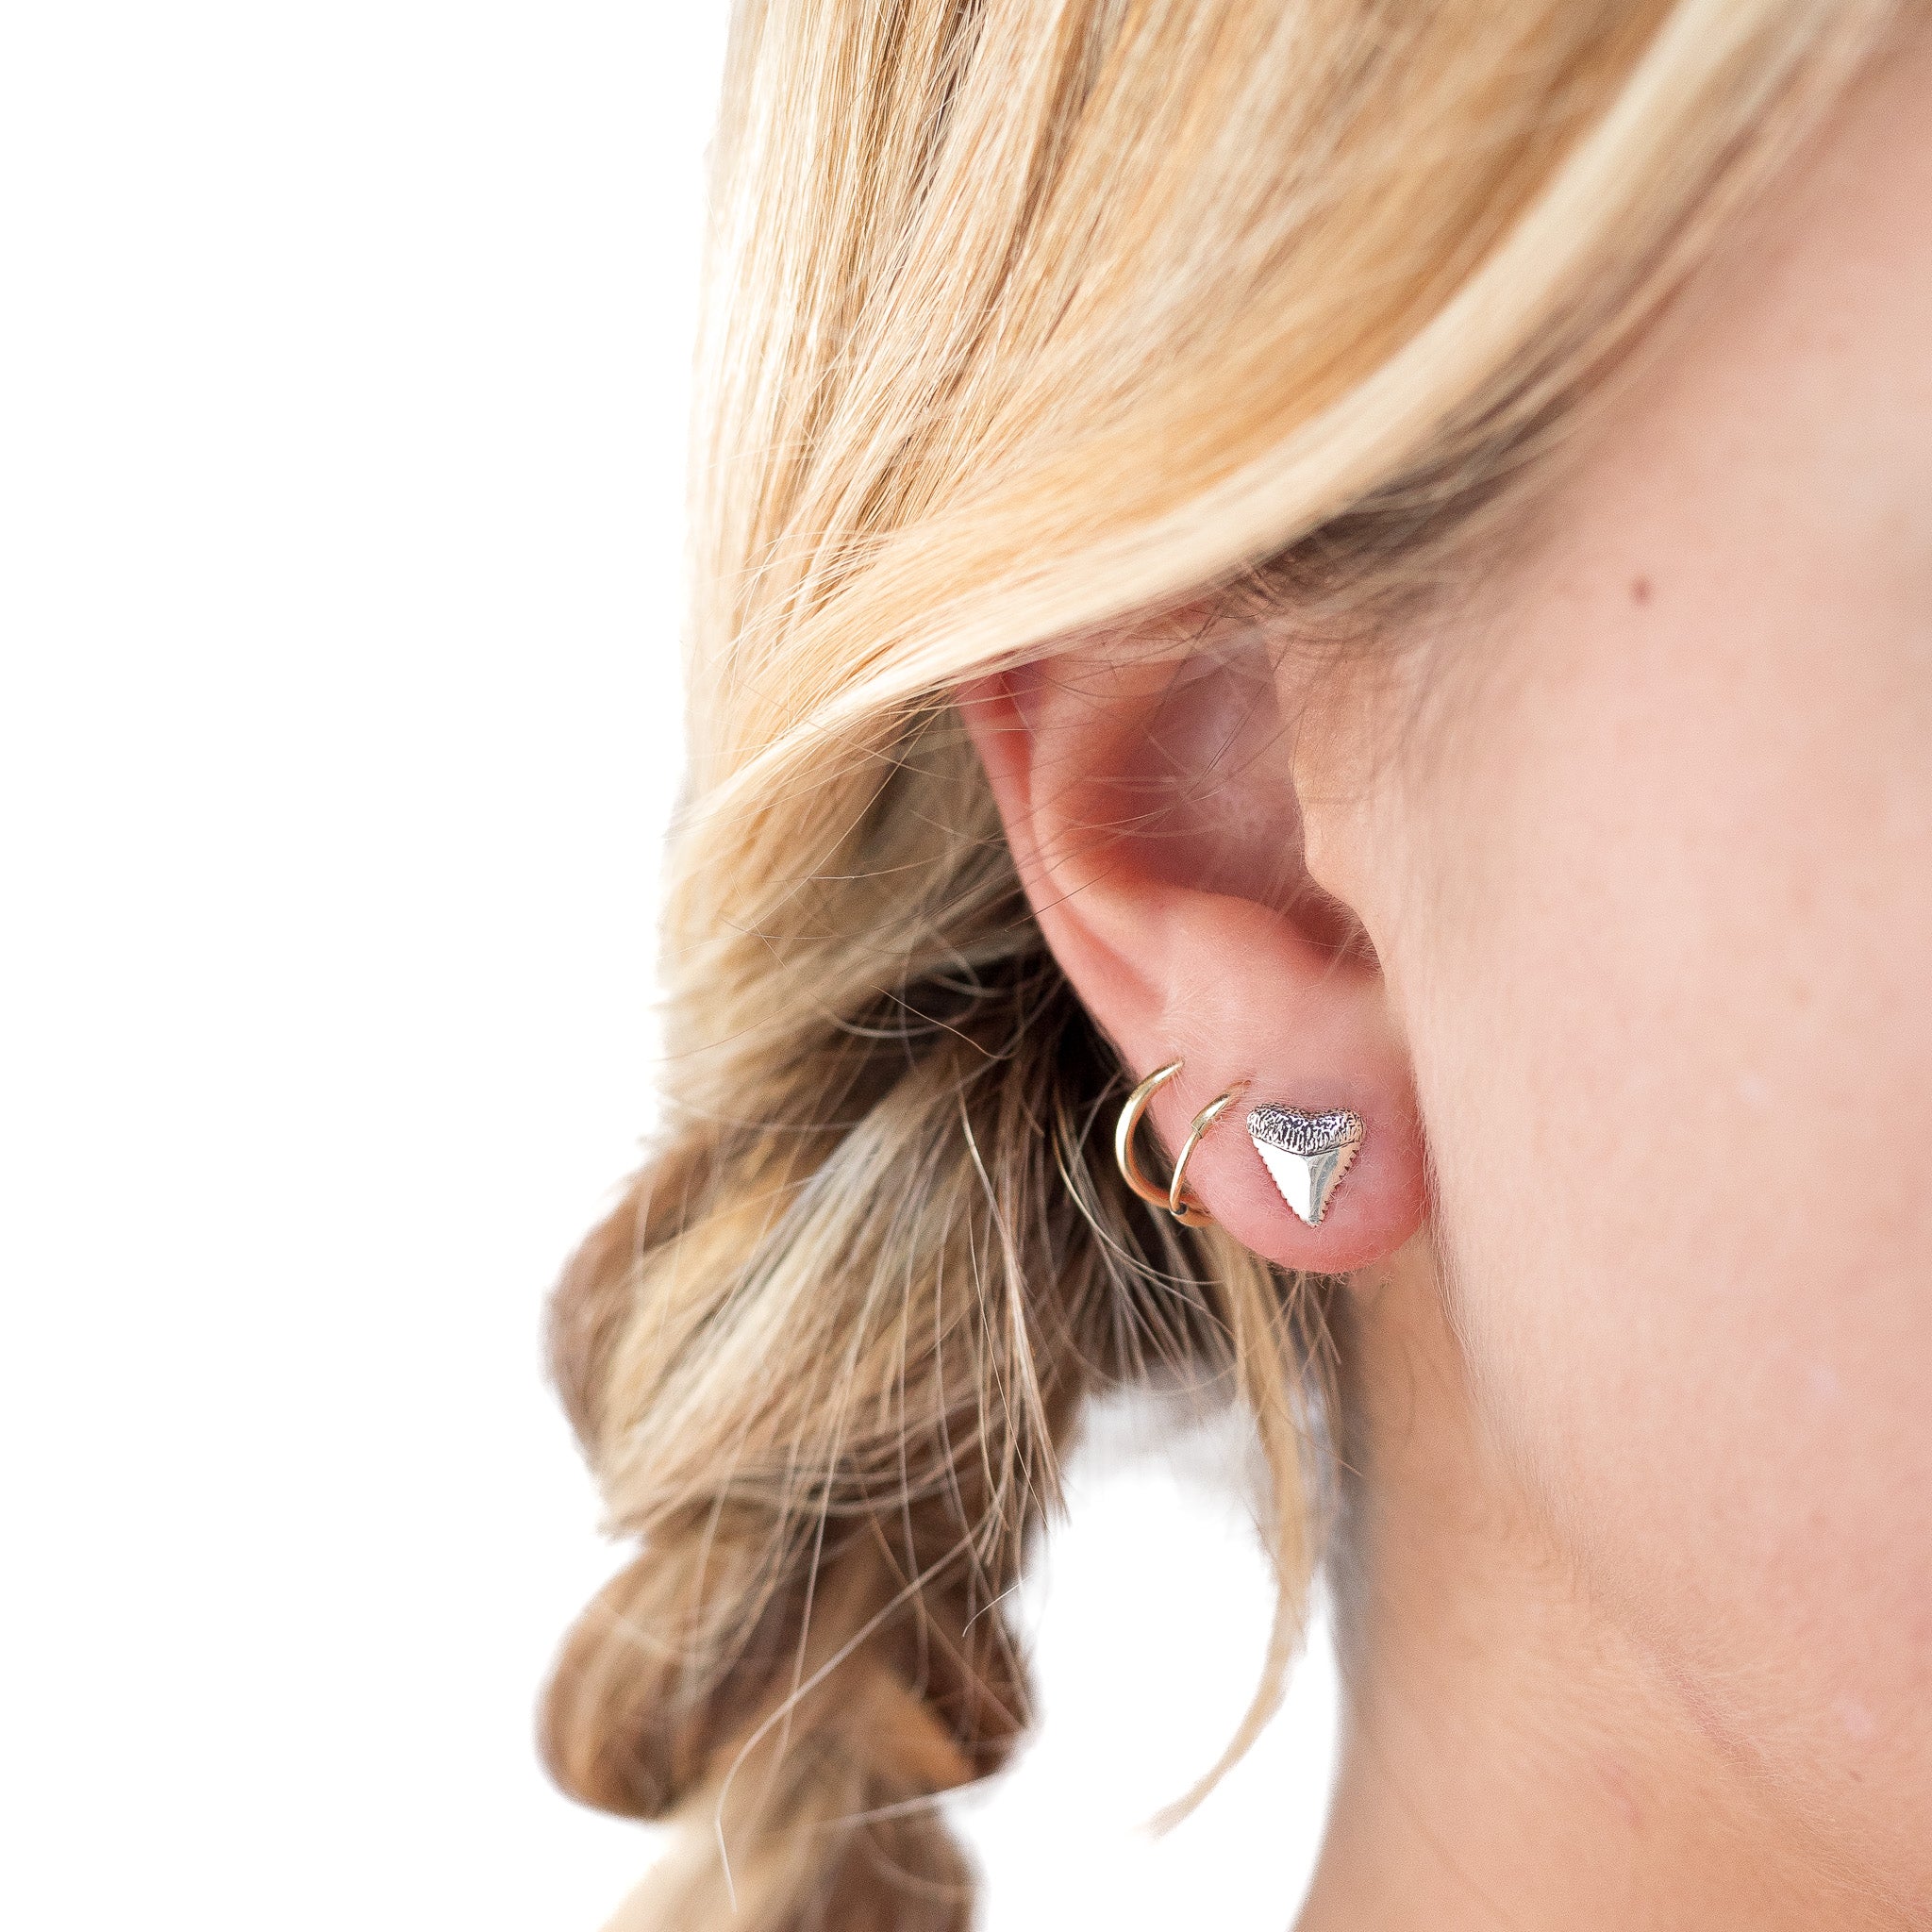 Sterling silver shark tooth stud earrings. Shown on a woman's ear. 